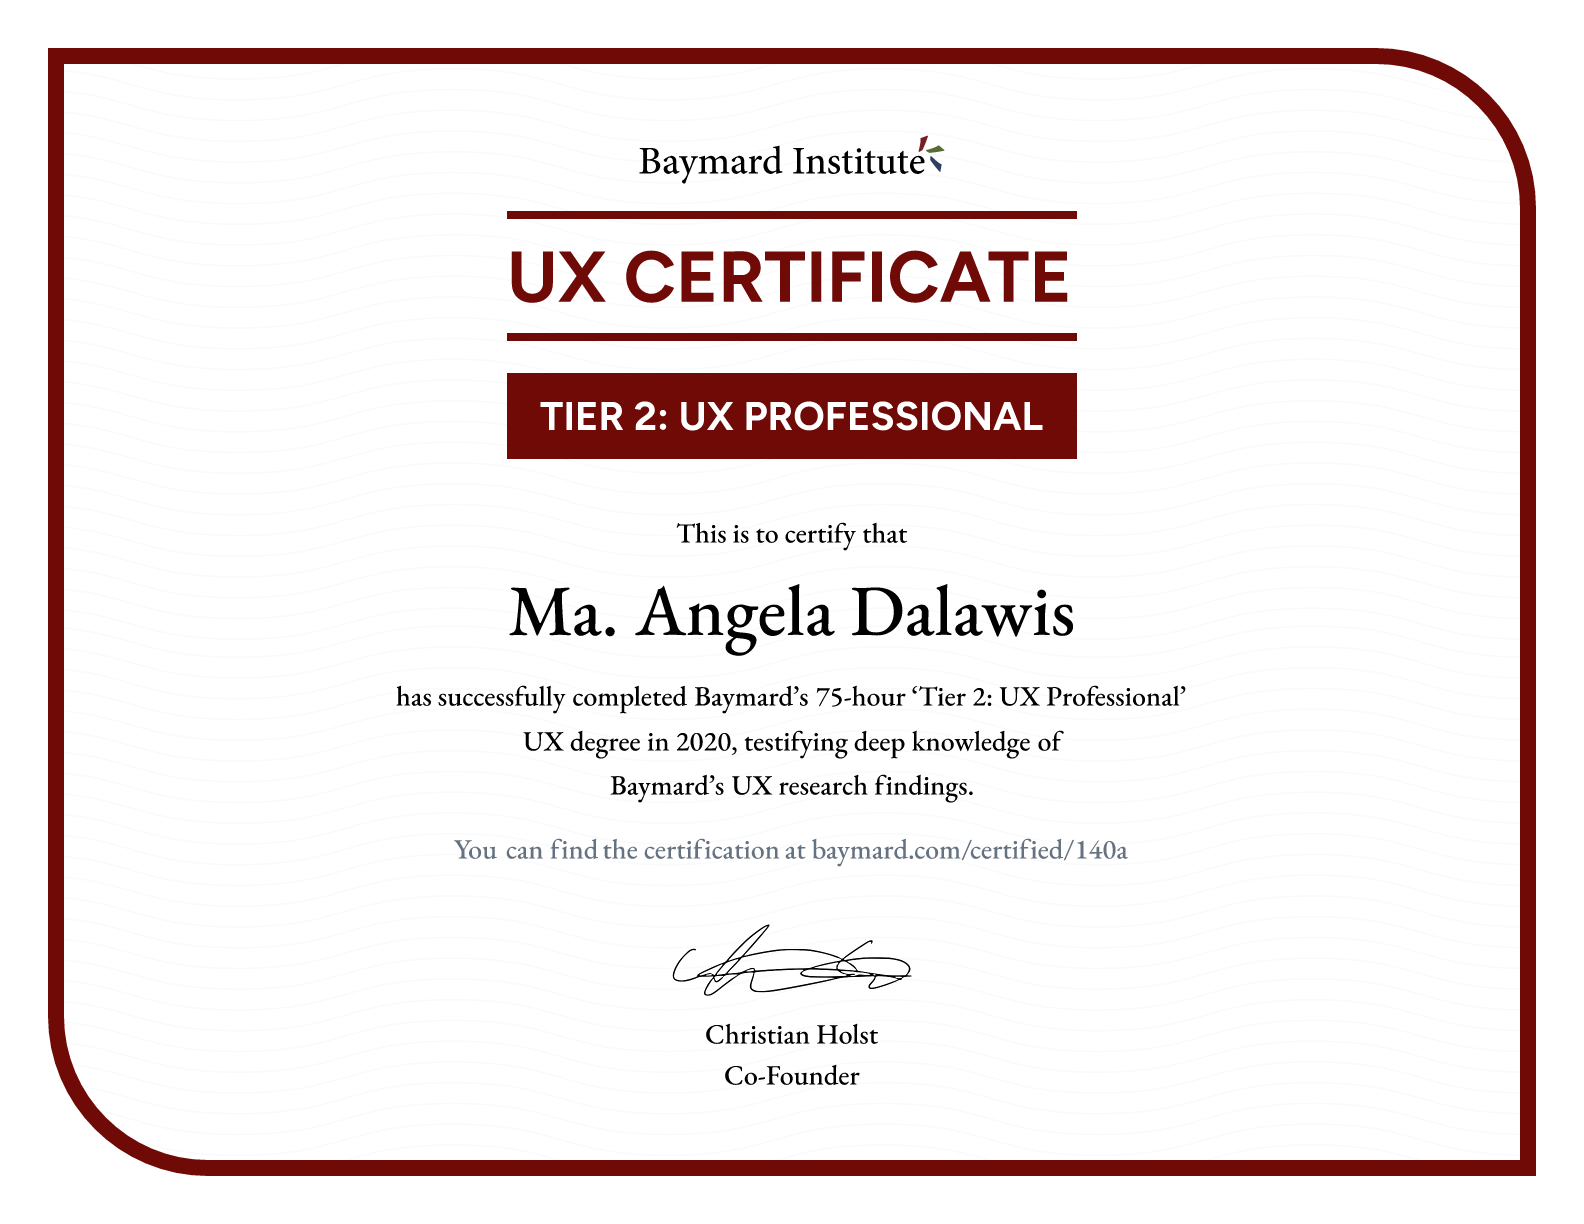 Ma. Angela Dalawis’s certificate